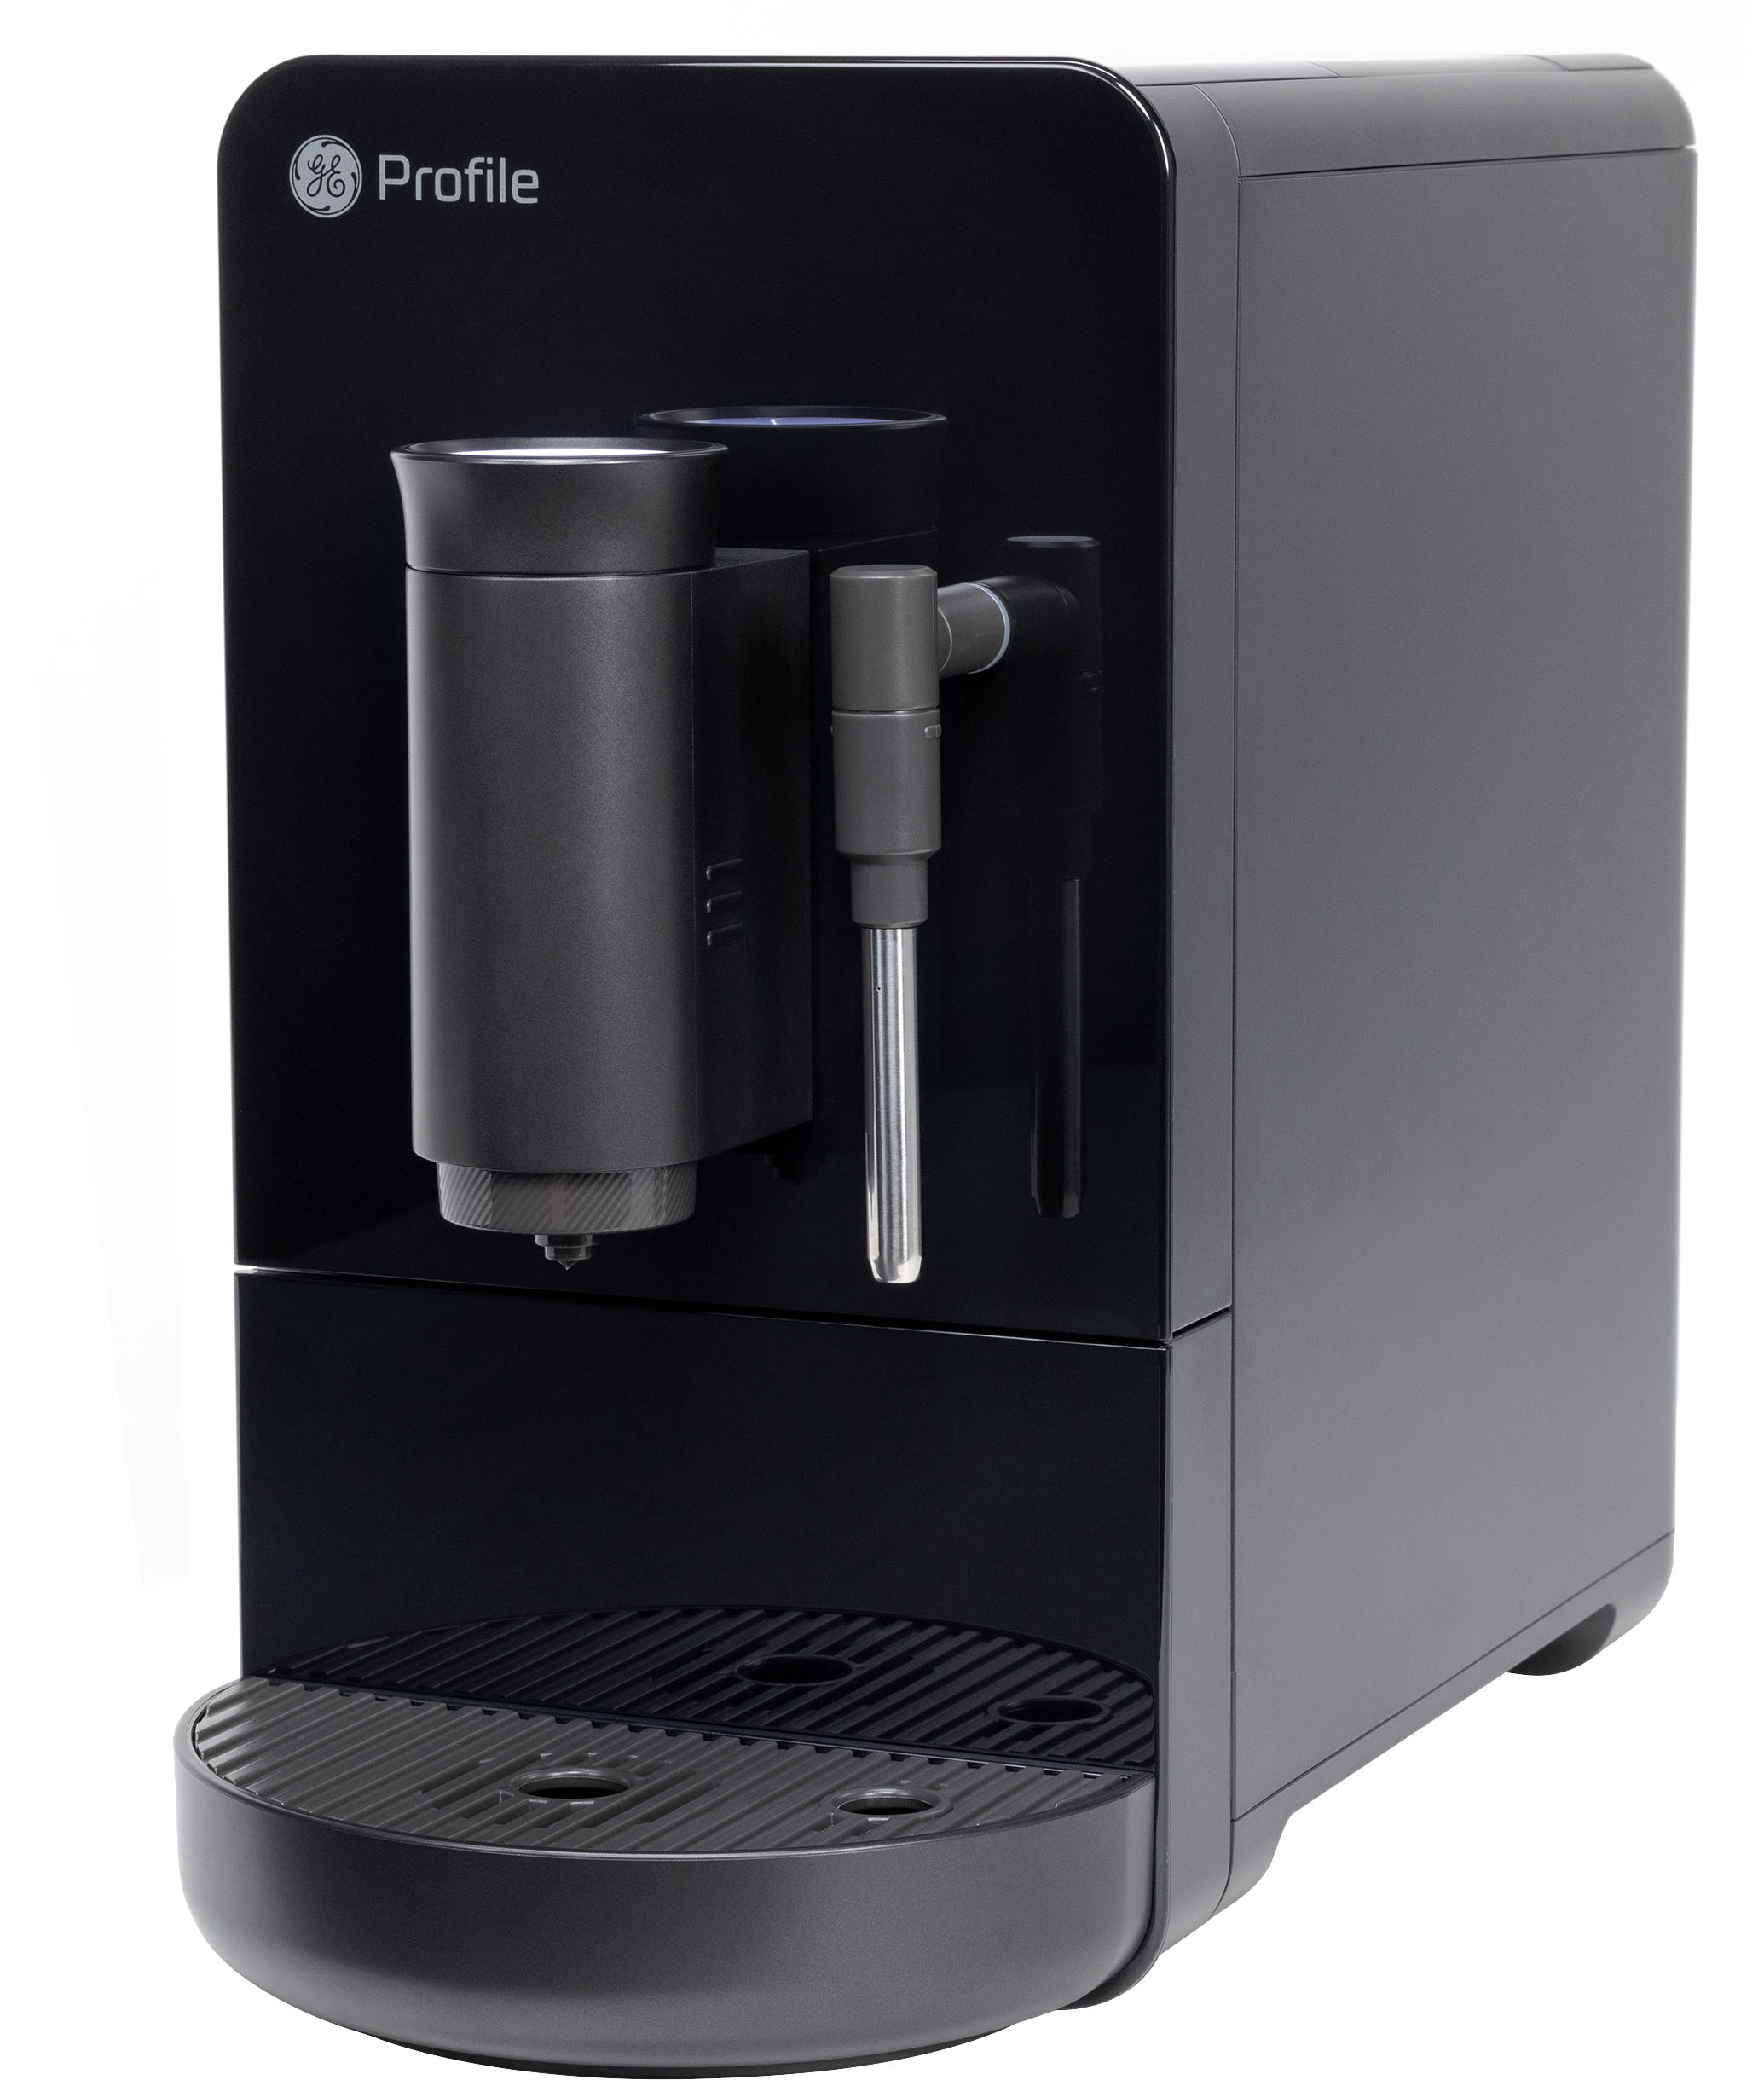 Lowestbest Fully Automatic Coffee Machine, Automatic Coffee Maker, Espresso Machine Combo, Grinder - Black